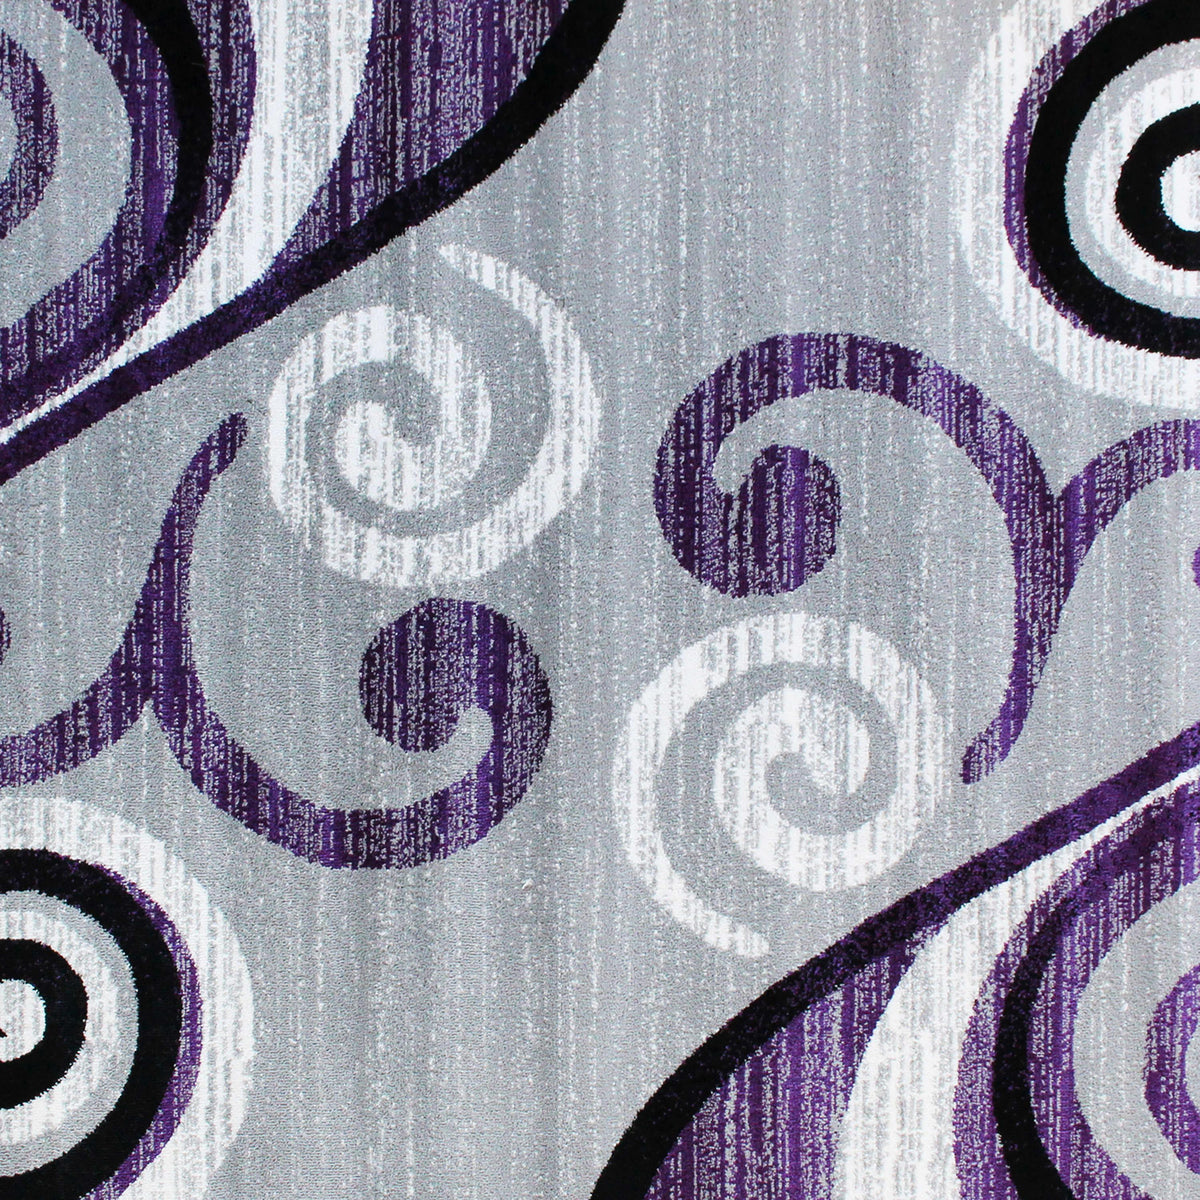 Purple,2' x 11' |#| Modern Distressed Swirl Abstract Style Indoor Area Rug in Purple - 2' x 11'